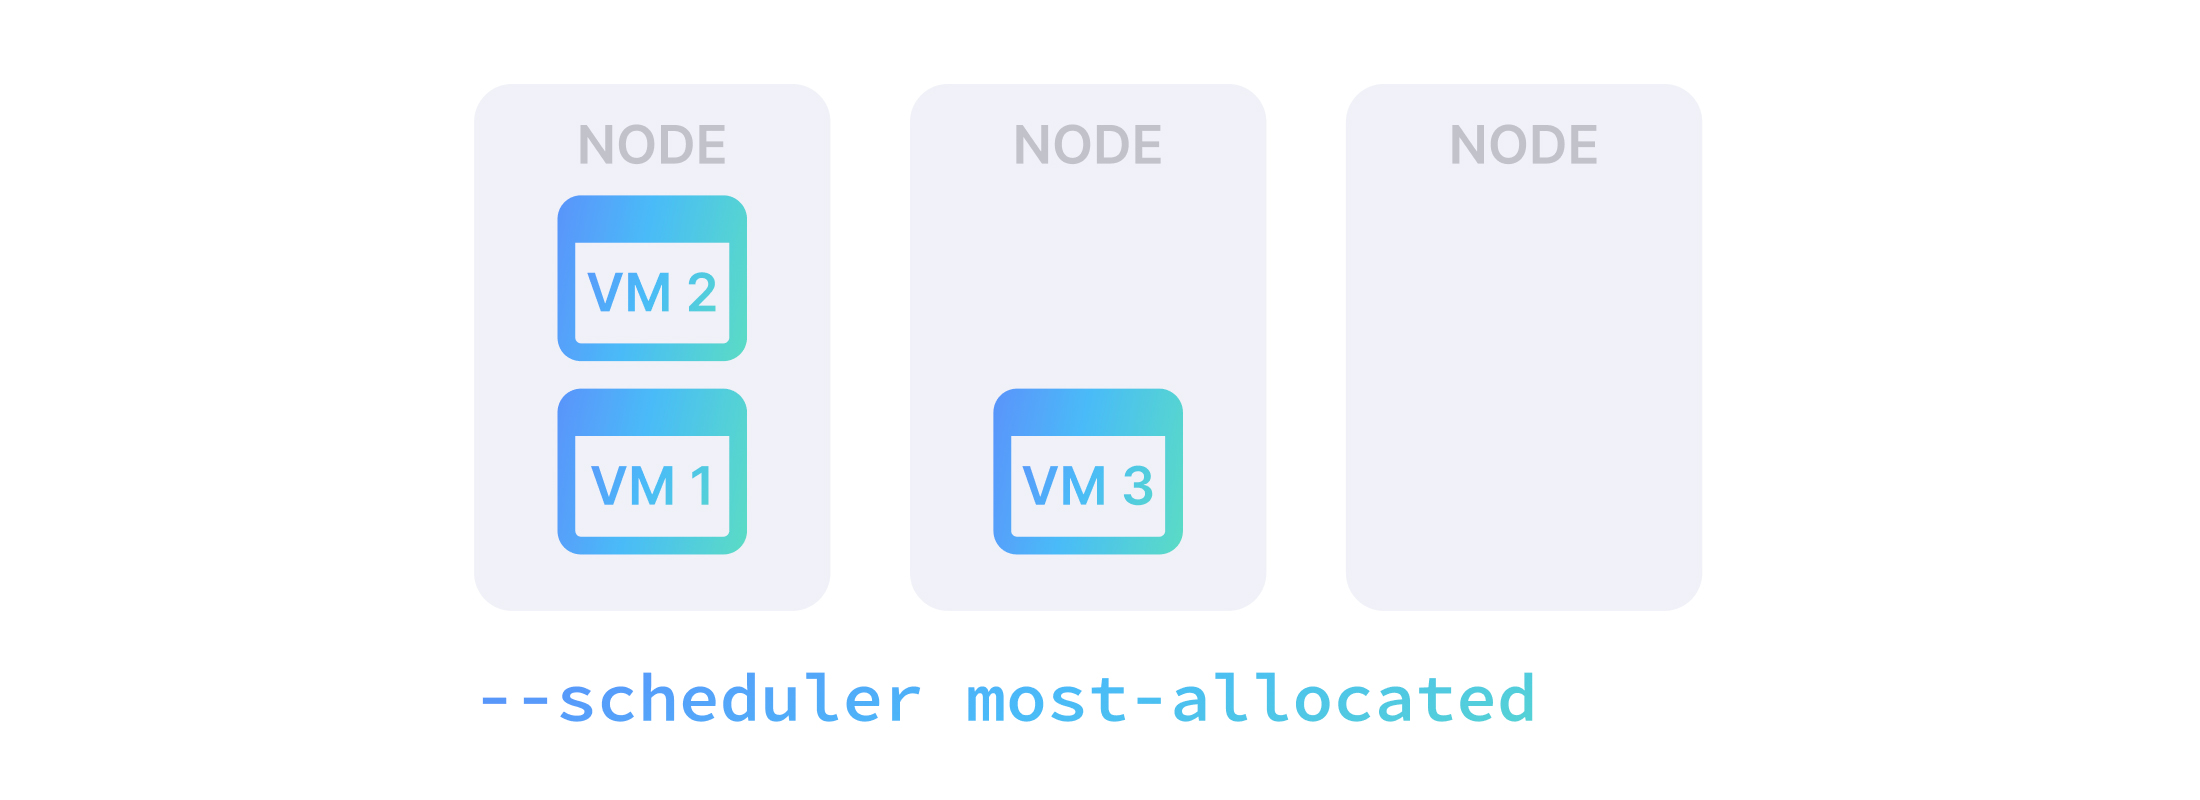 VM scheduler most-allocated